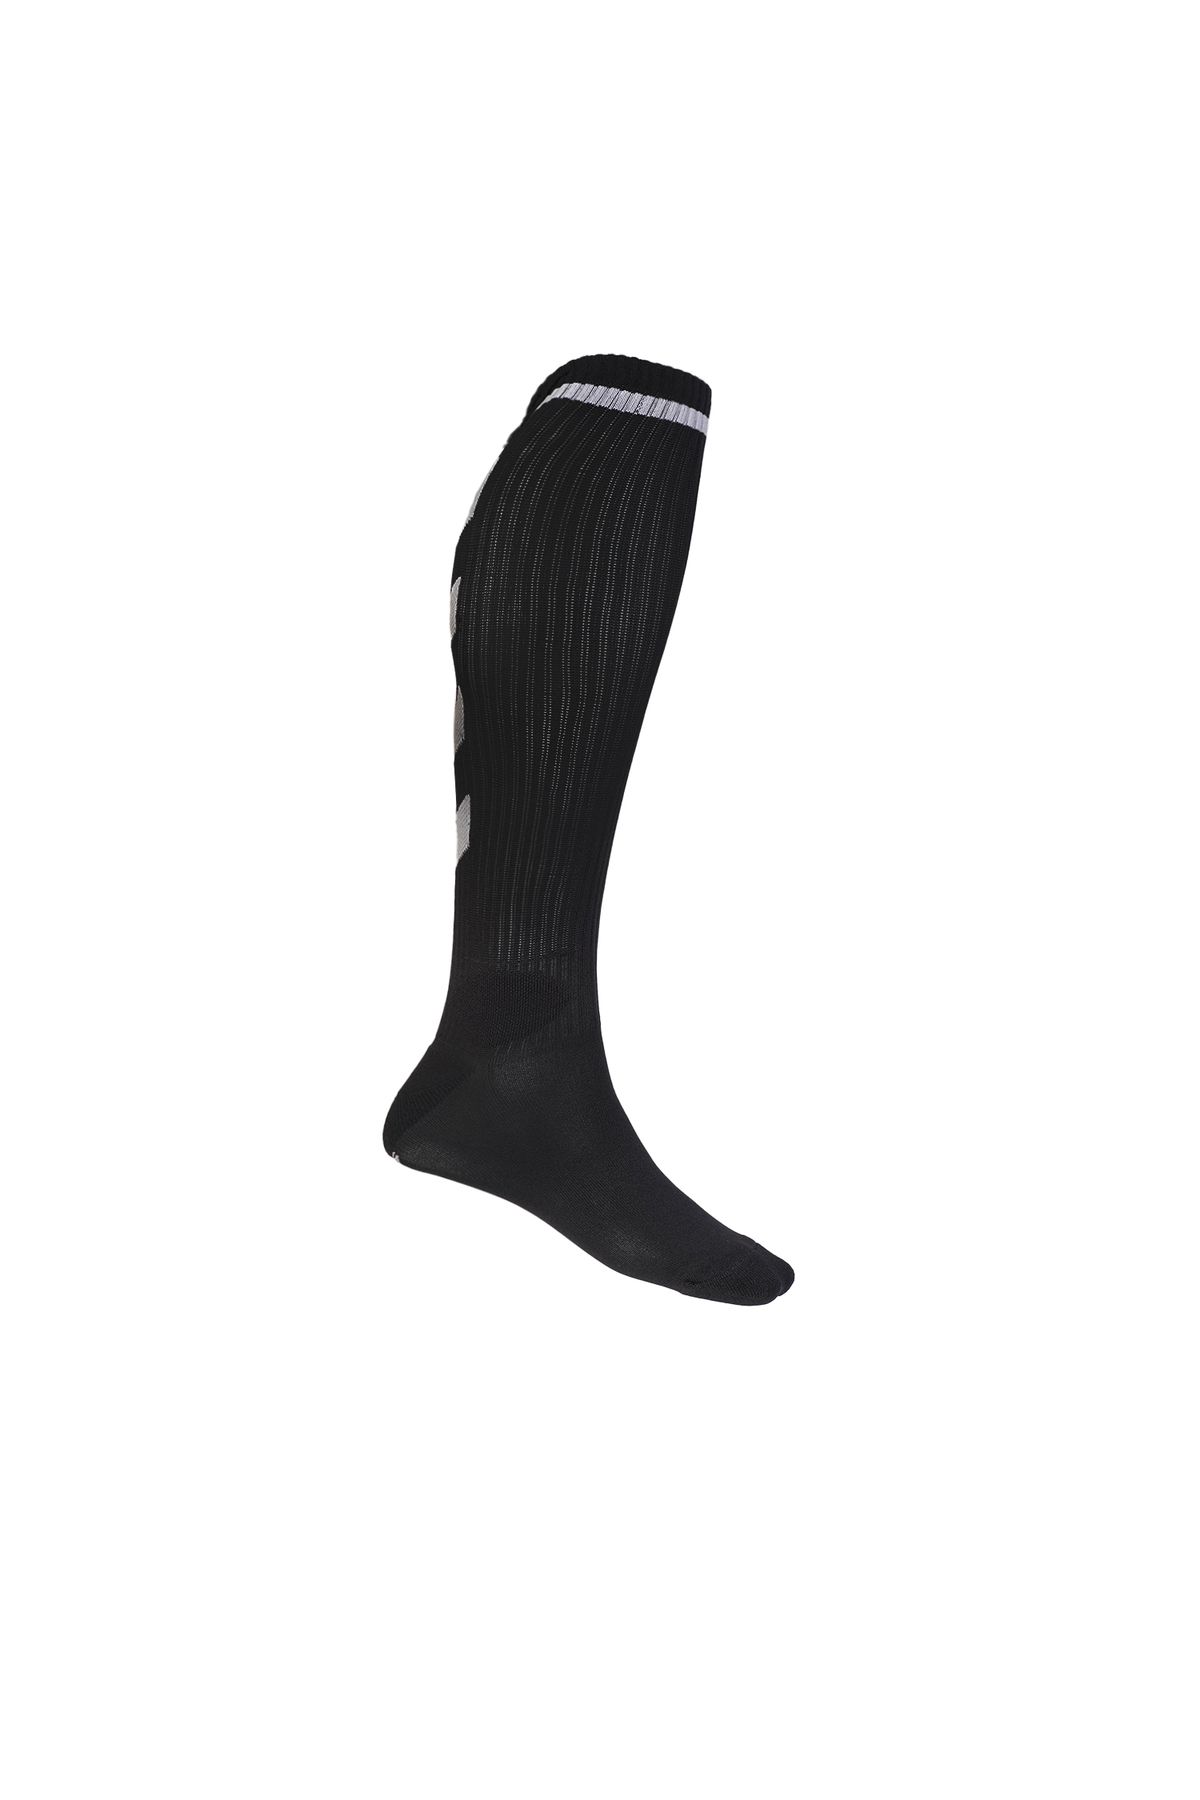 hummel Longfootball Unisex Siyah Çorap